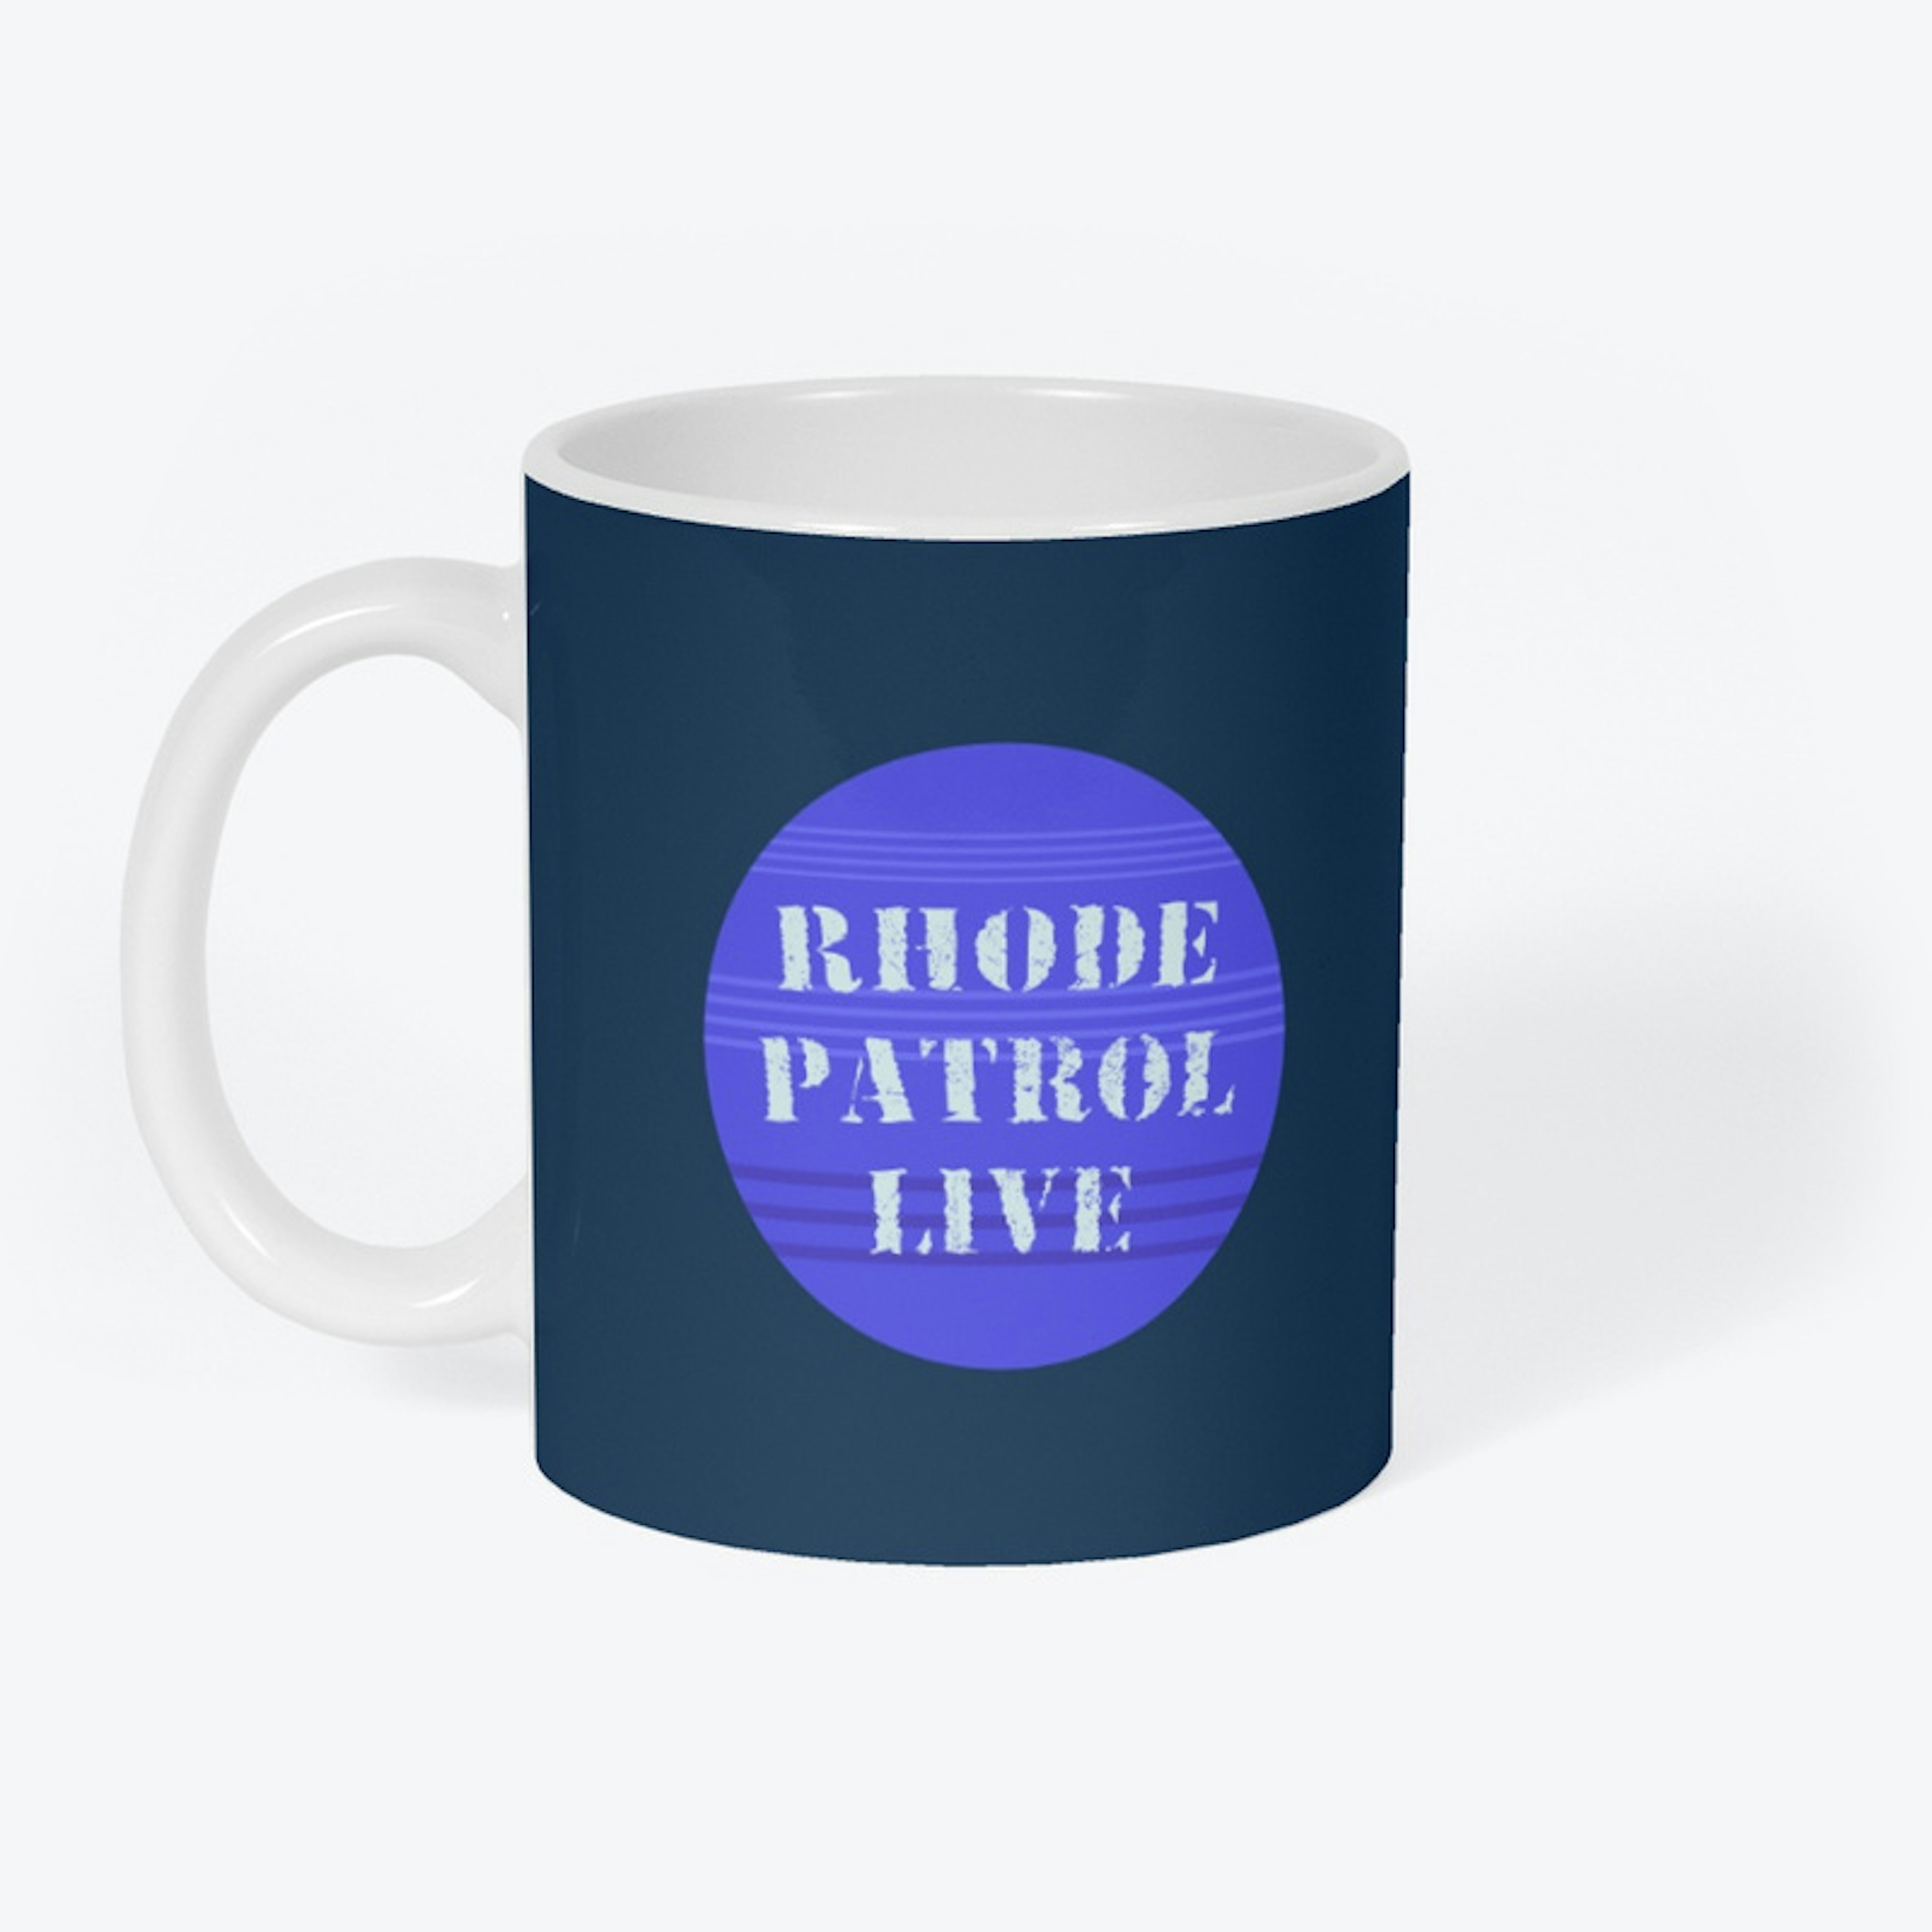 Rhode Patrol Live 2